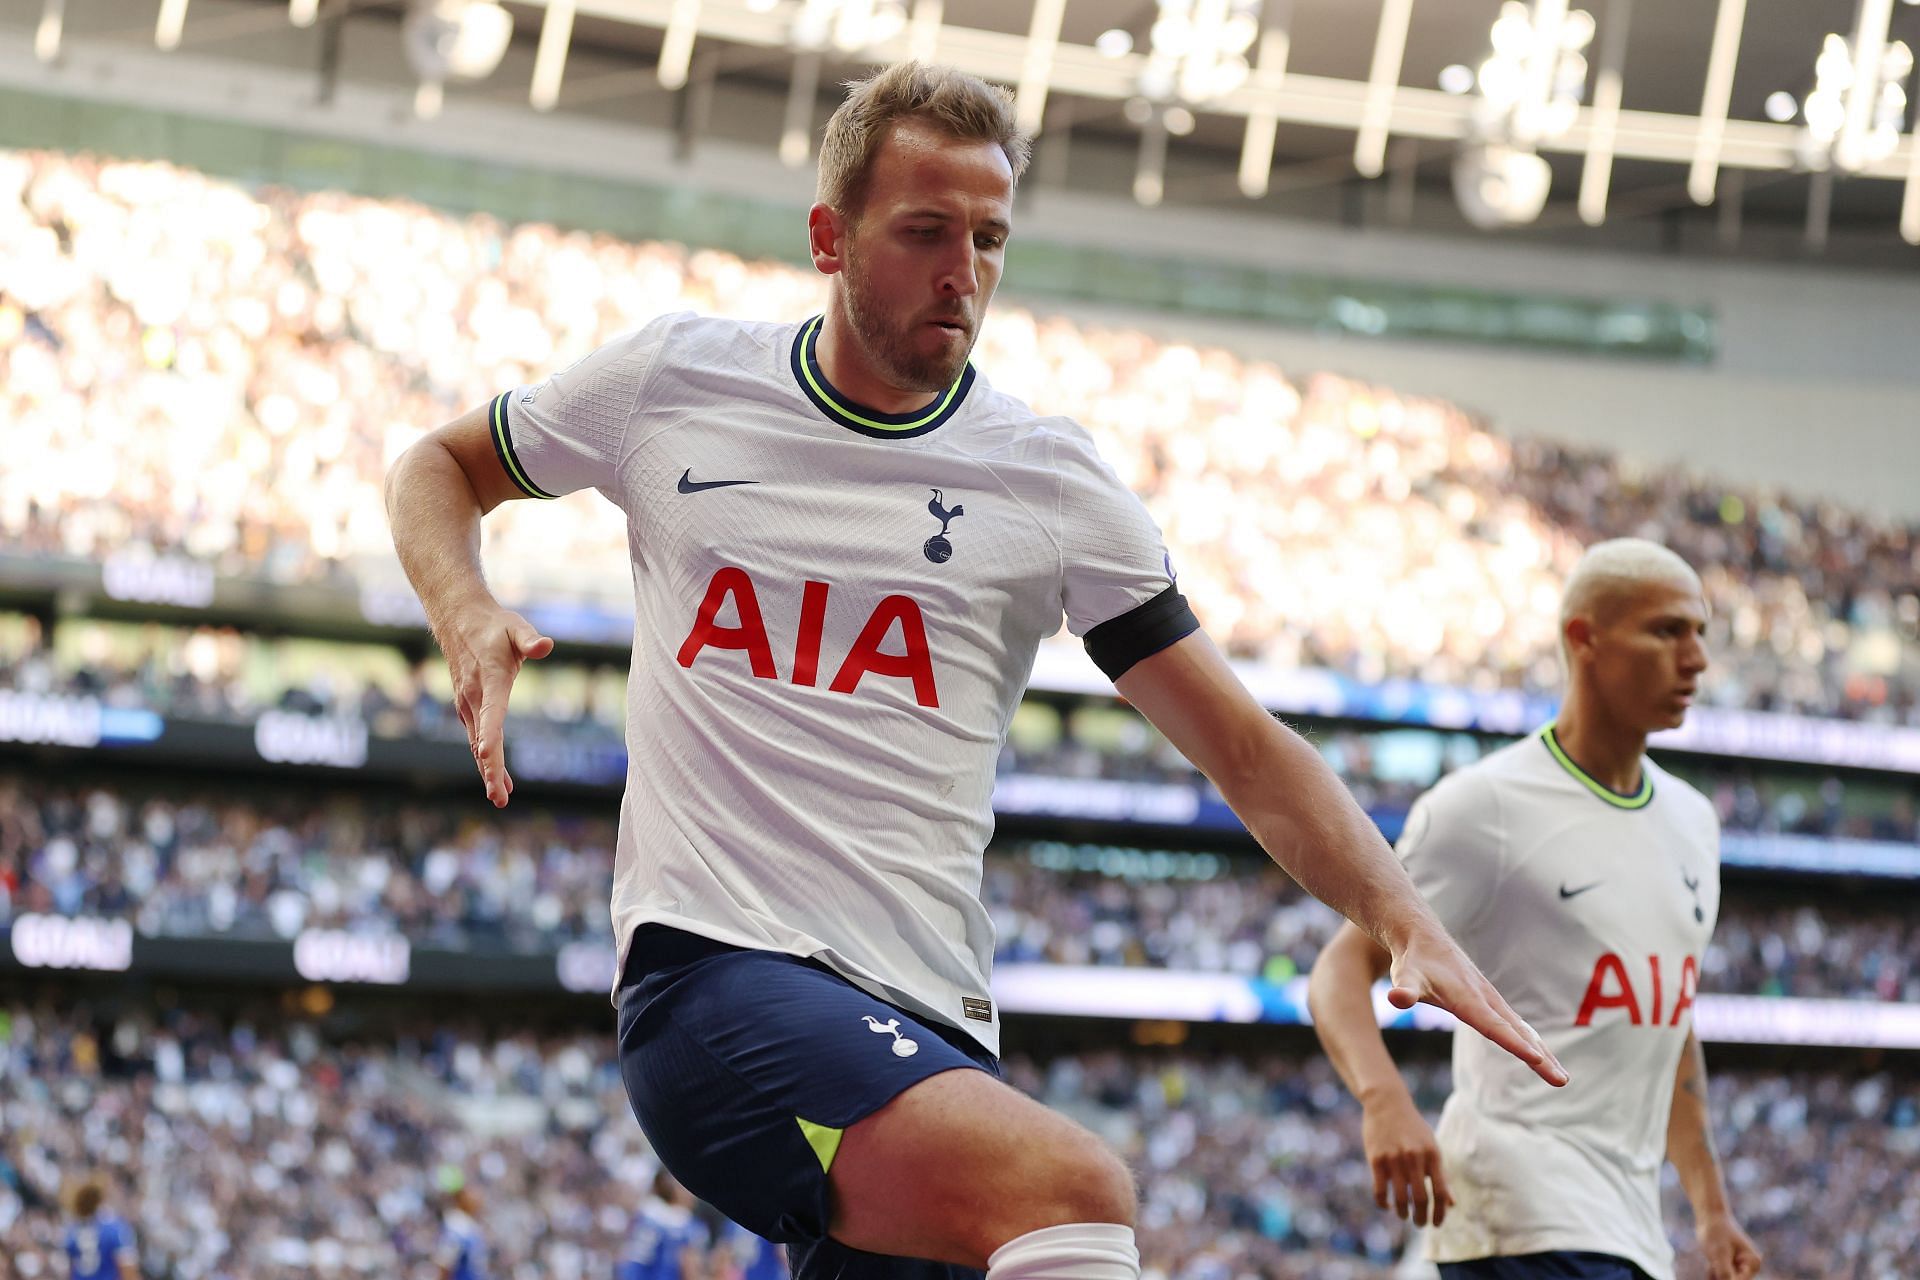 Kane has scored 20 league goals in 2022 for Tottenham